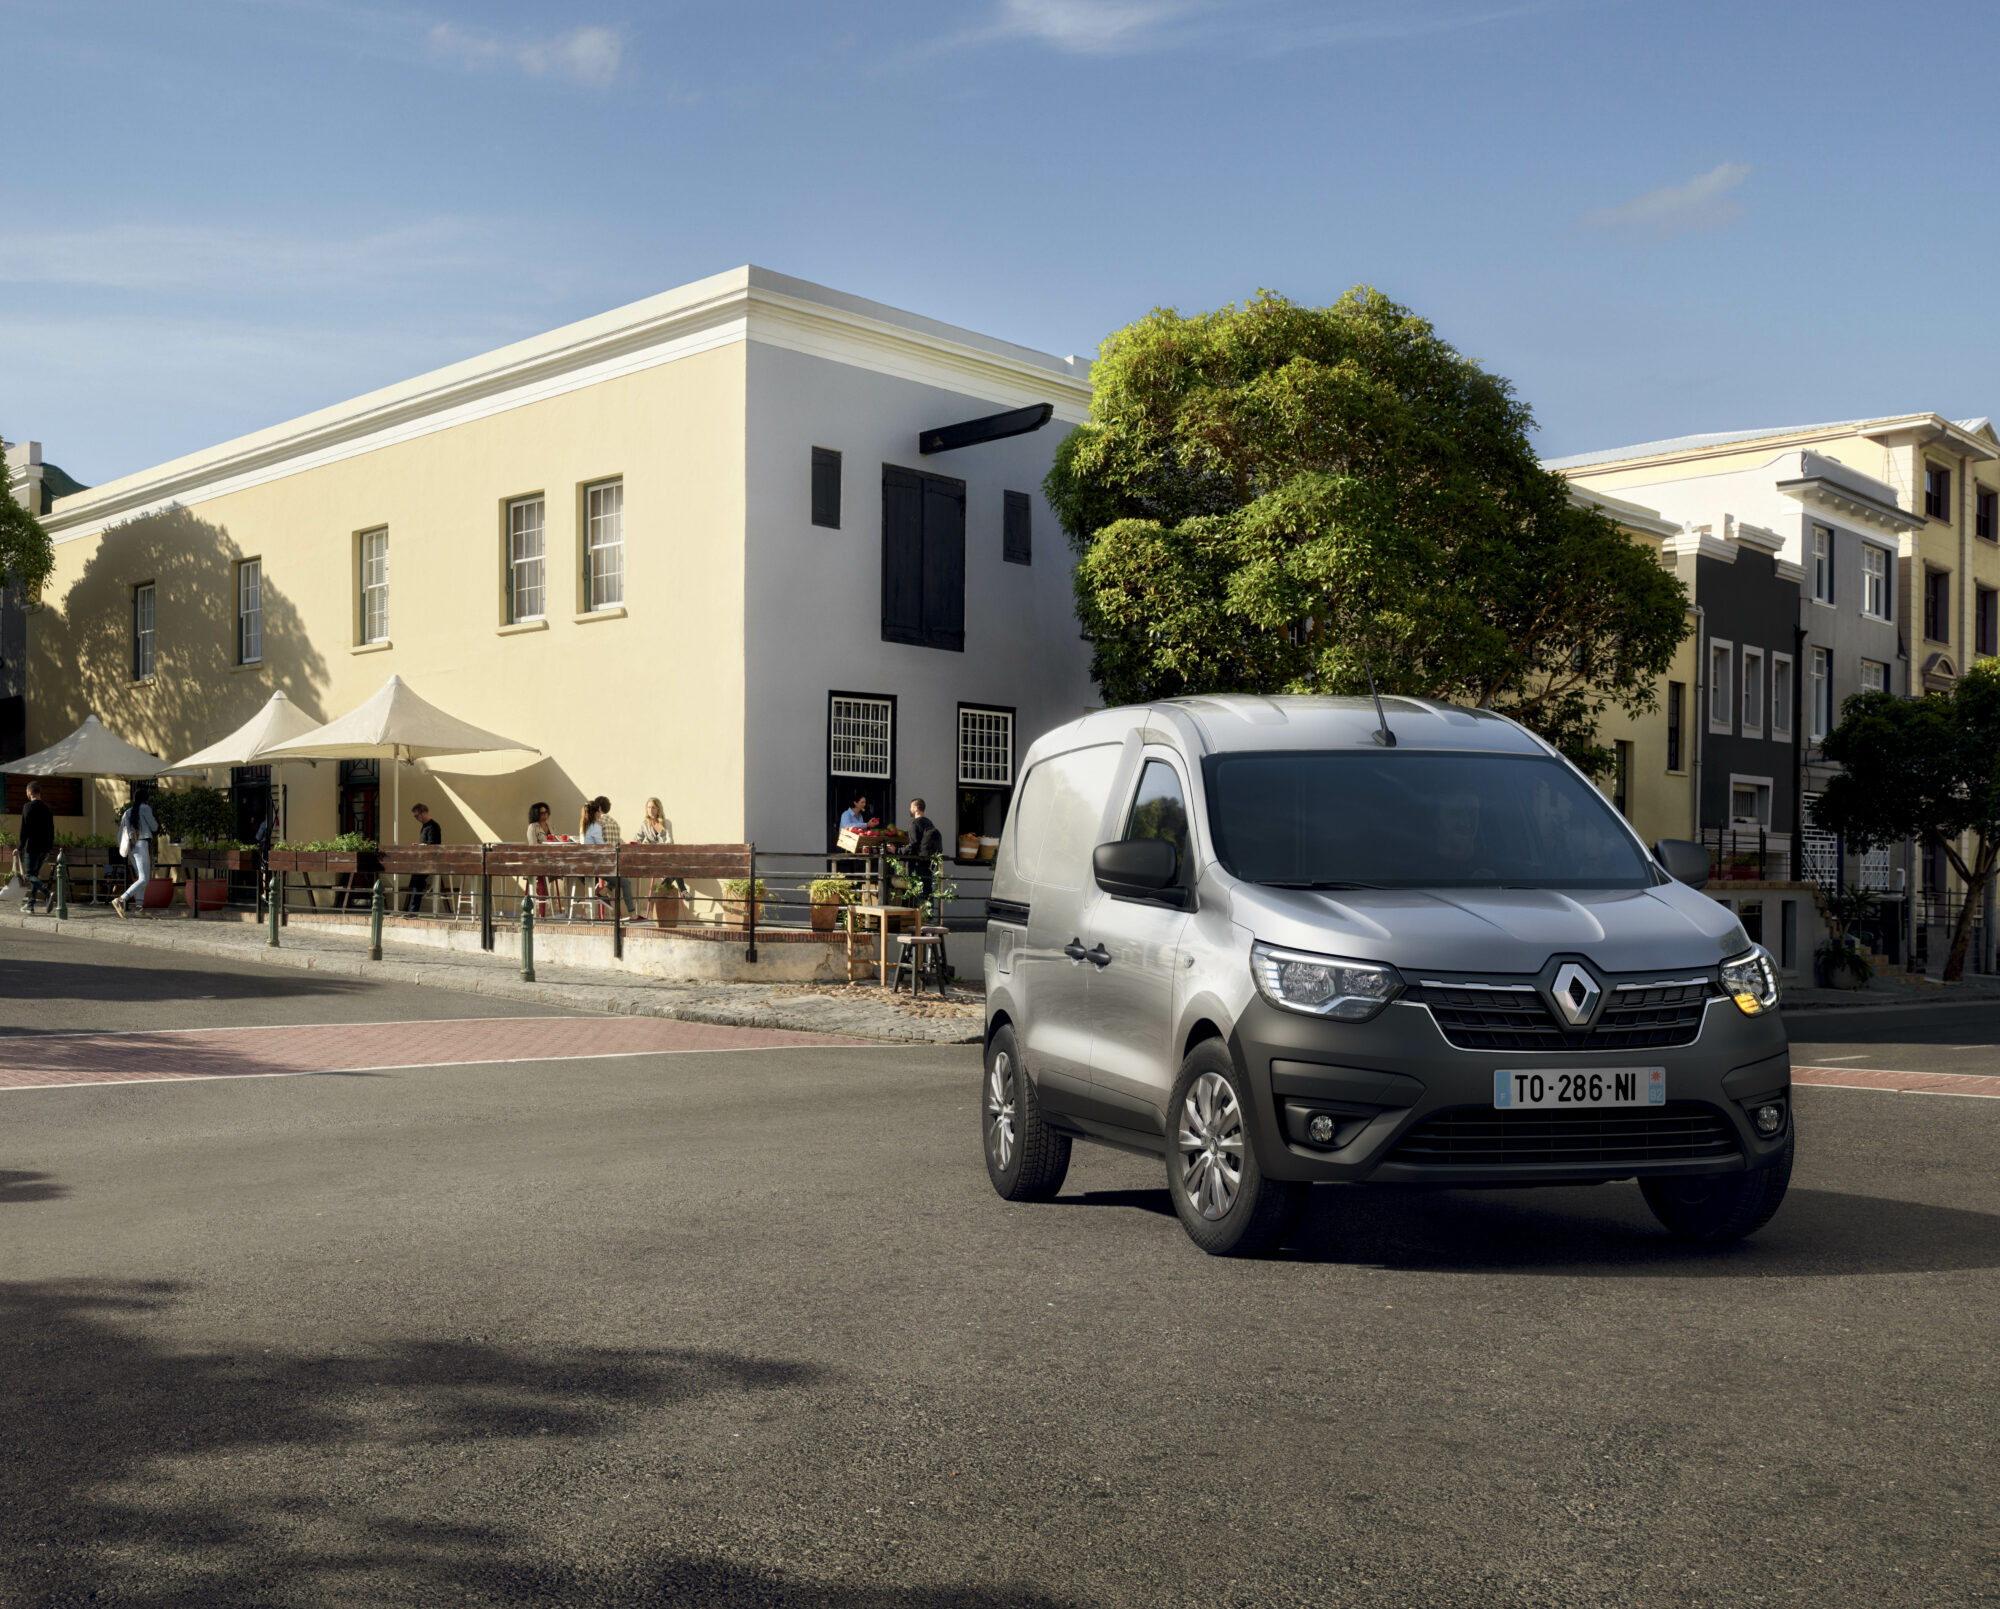 2021 - New Renault Express Van on location